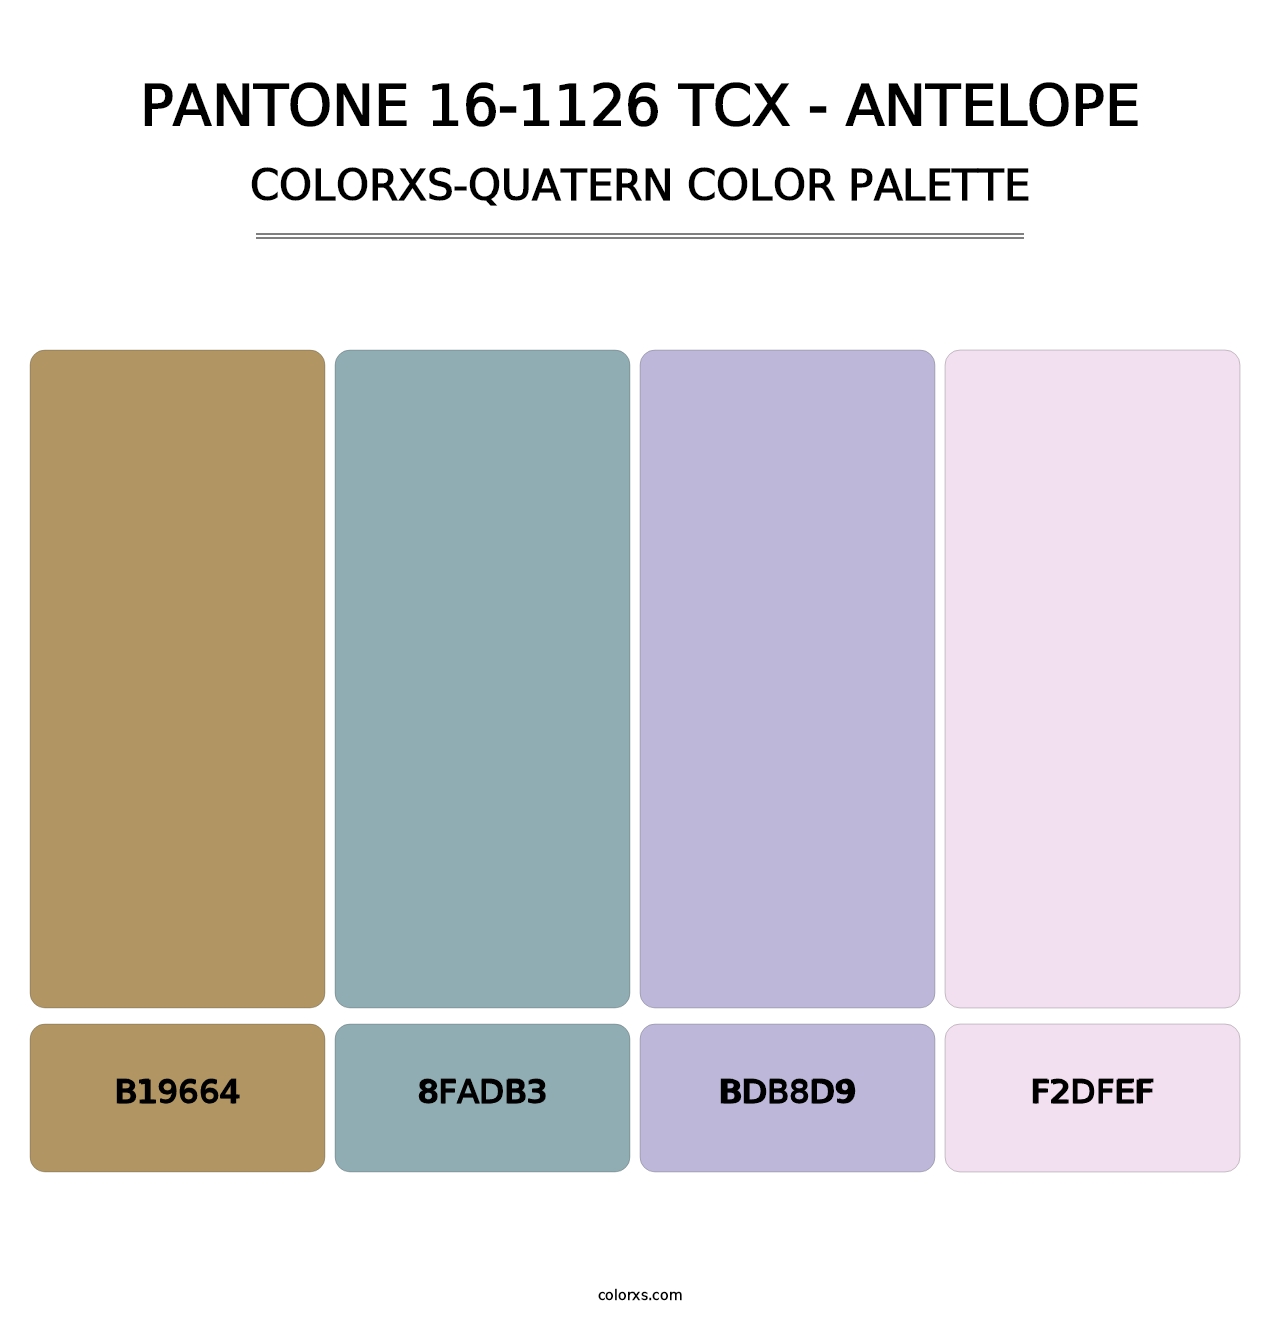 PANTONE 16-1126 TCX - Antelope - Colorxs Quatern Palette